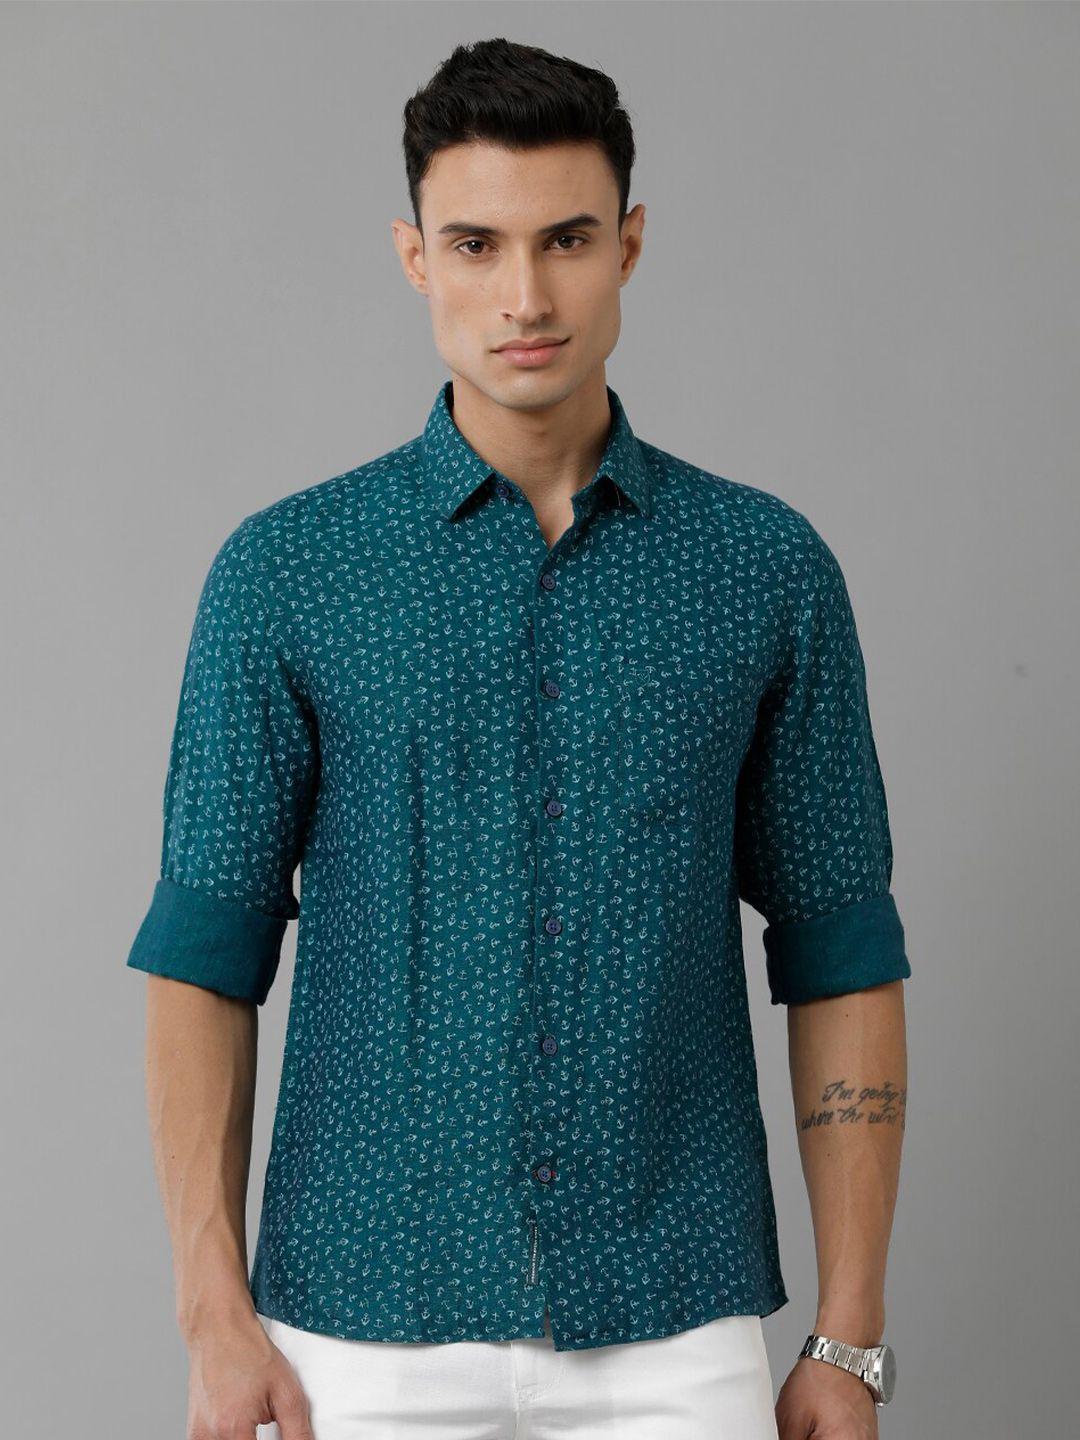 linen-club-conversational-printed-pure-linen-casual-shirt